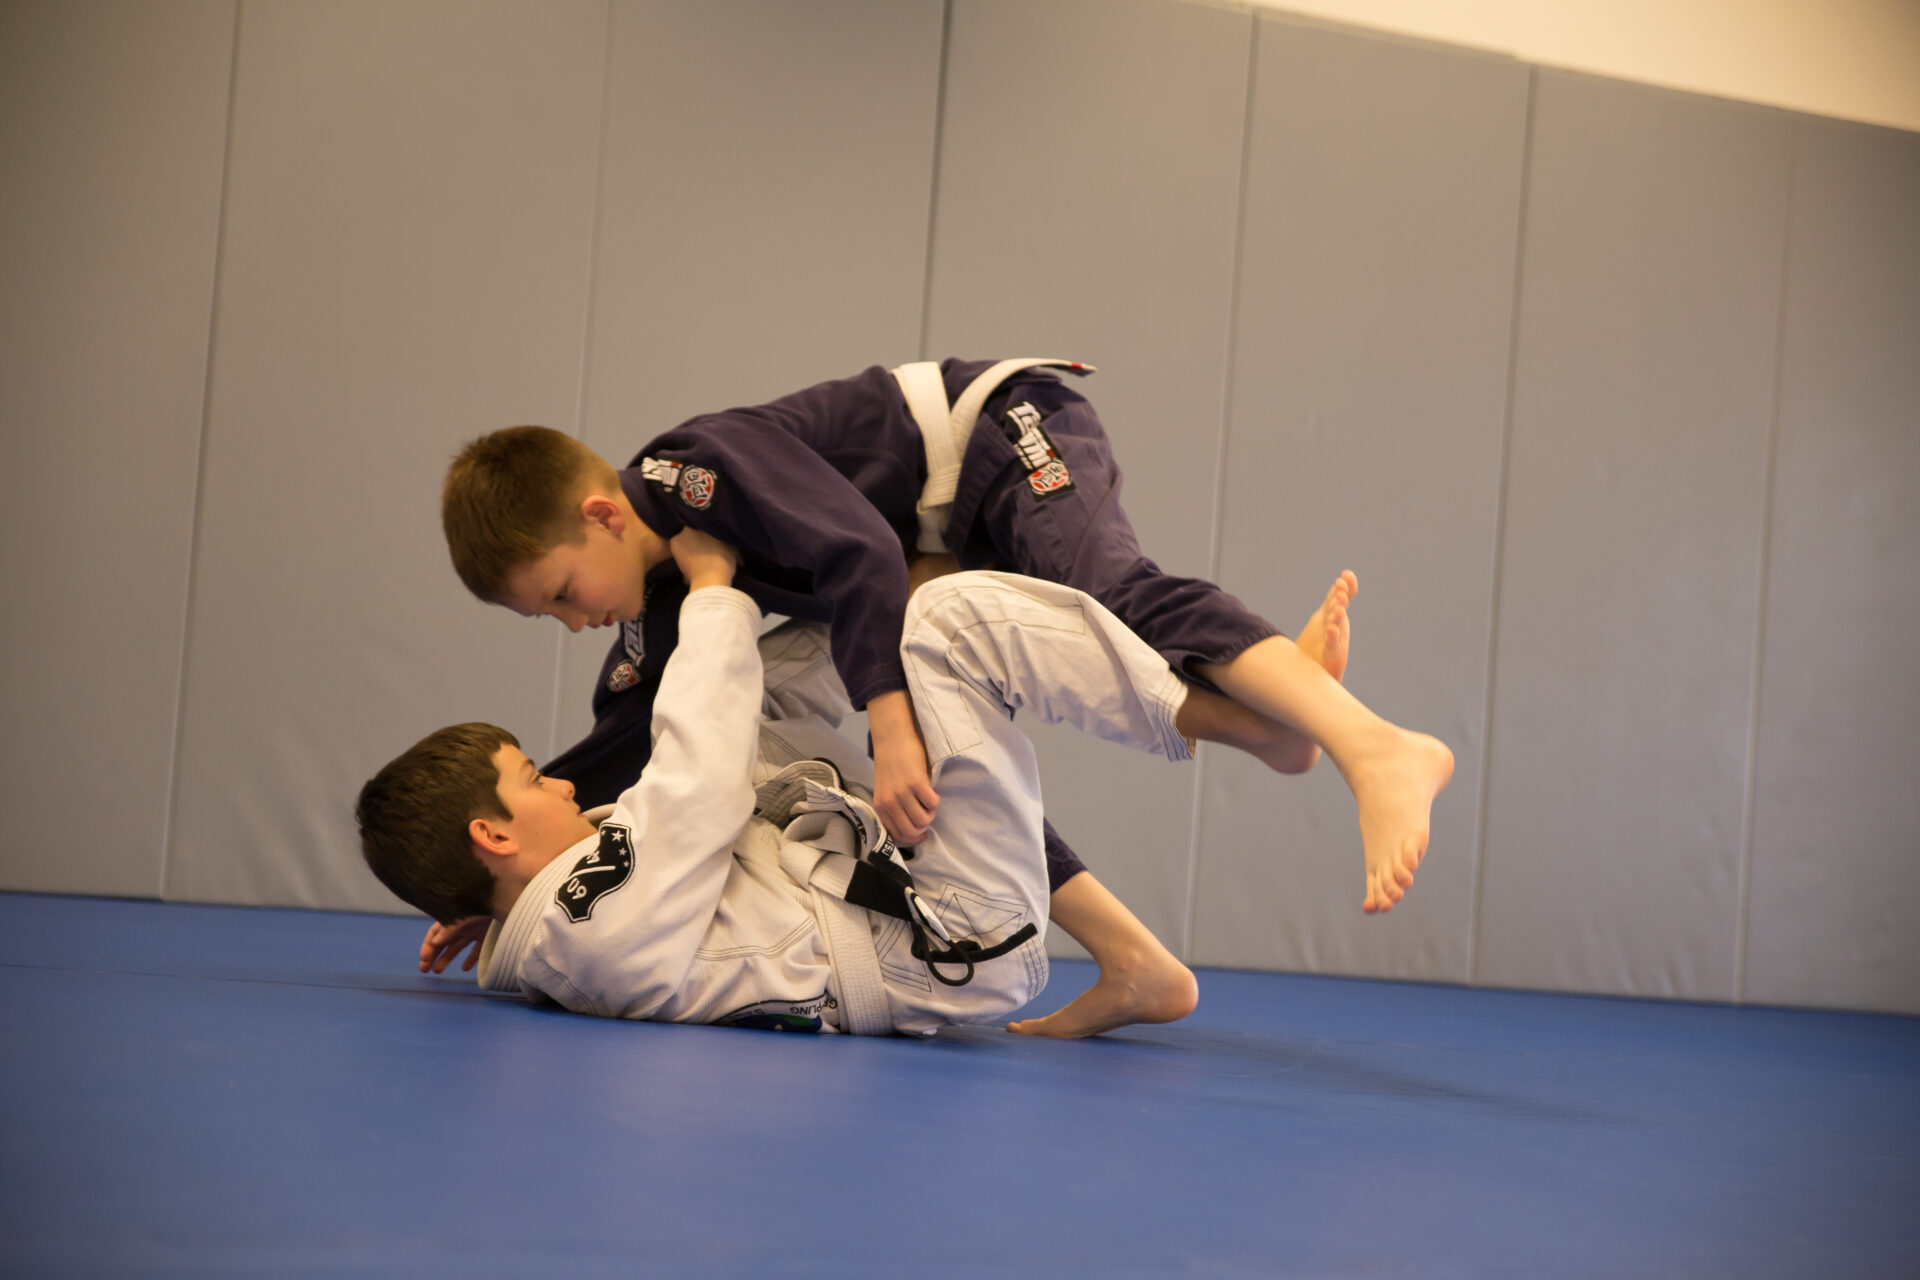 Two boys are practicing jiu jitsu on a blue mat.